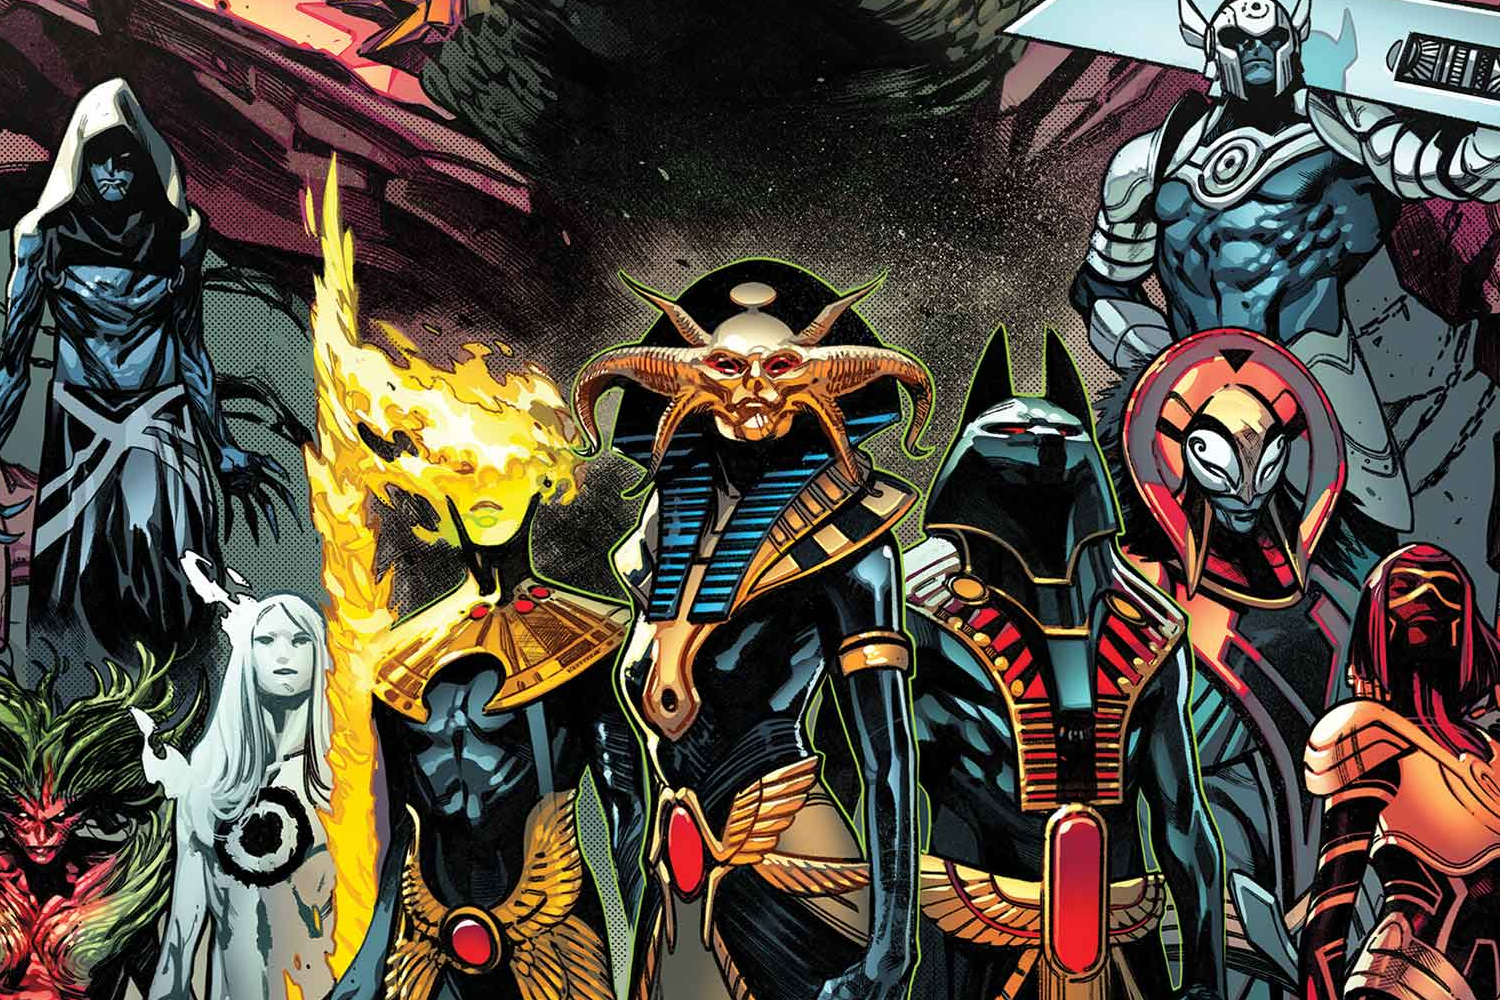 X-Men Senior Editor Jordan D. White hints 2004 comic 'District X' and Mr. M tie into 'X of Swords'